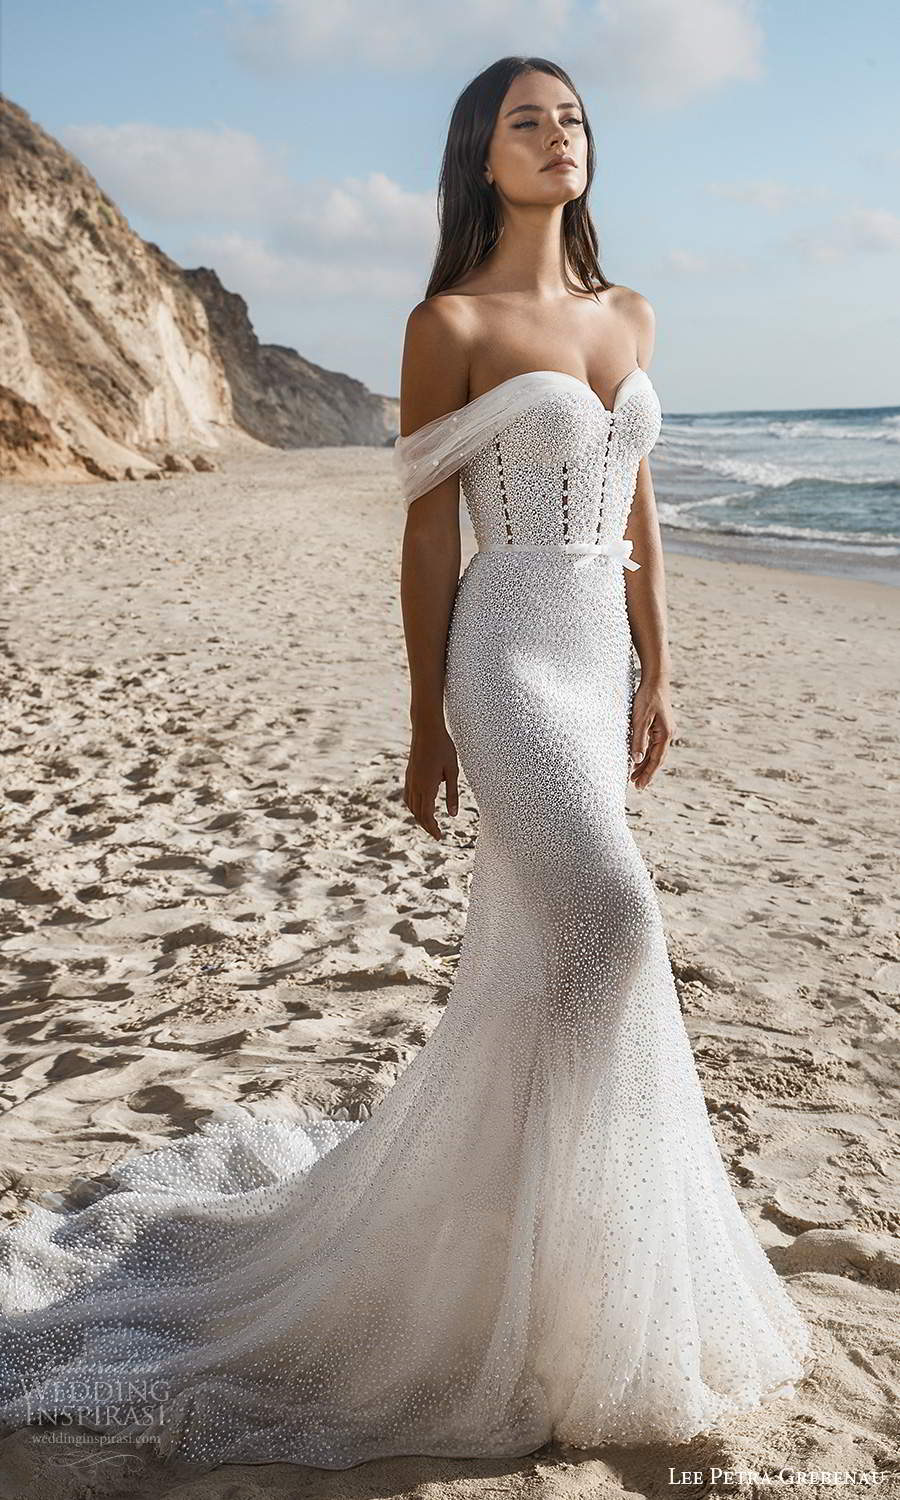 lee petra grebenau 2021 bridal off shoulder straps sweetheart neckline fully embellished sheath wedding dress chapel train (6) mv